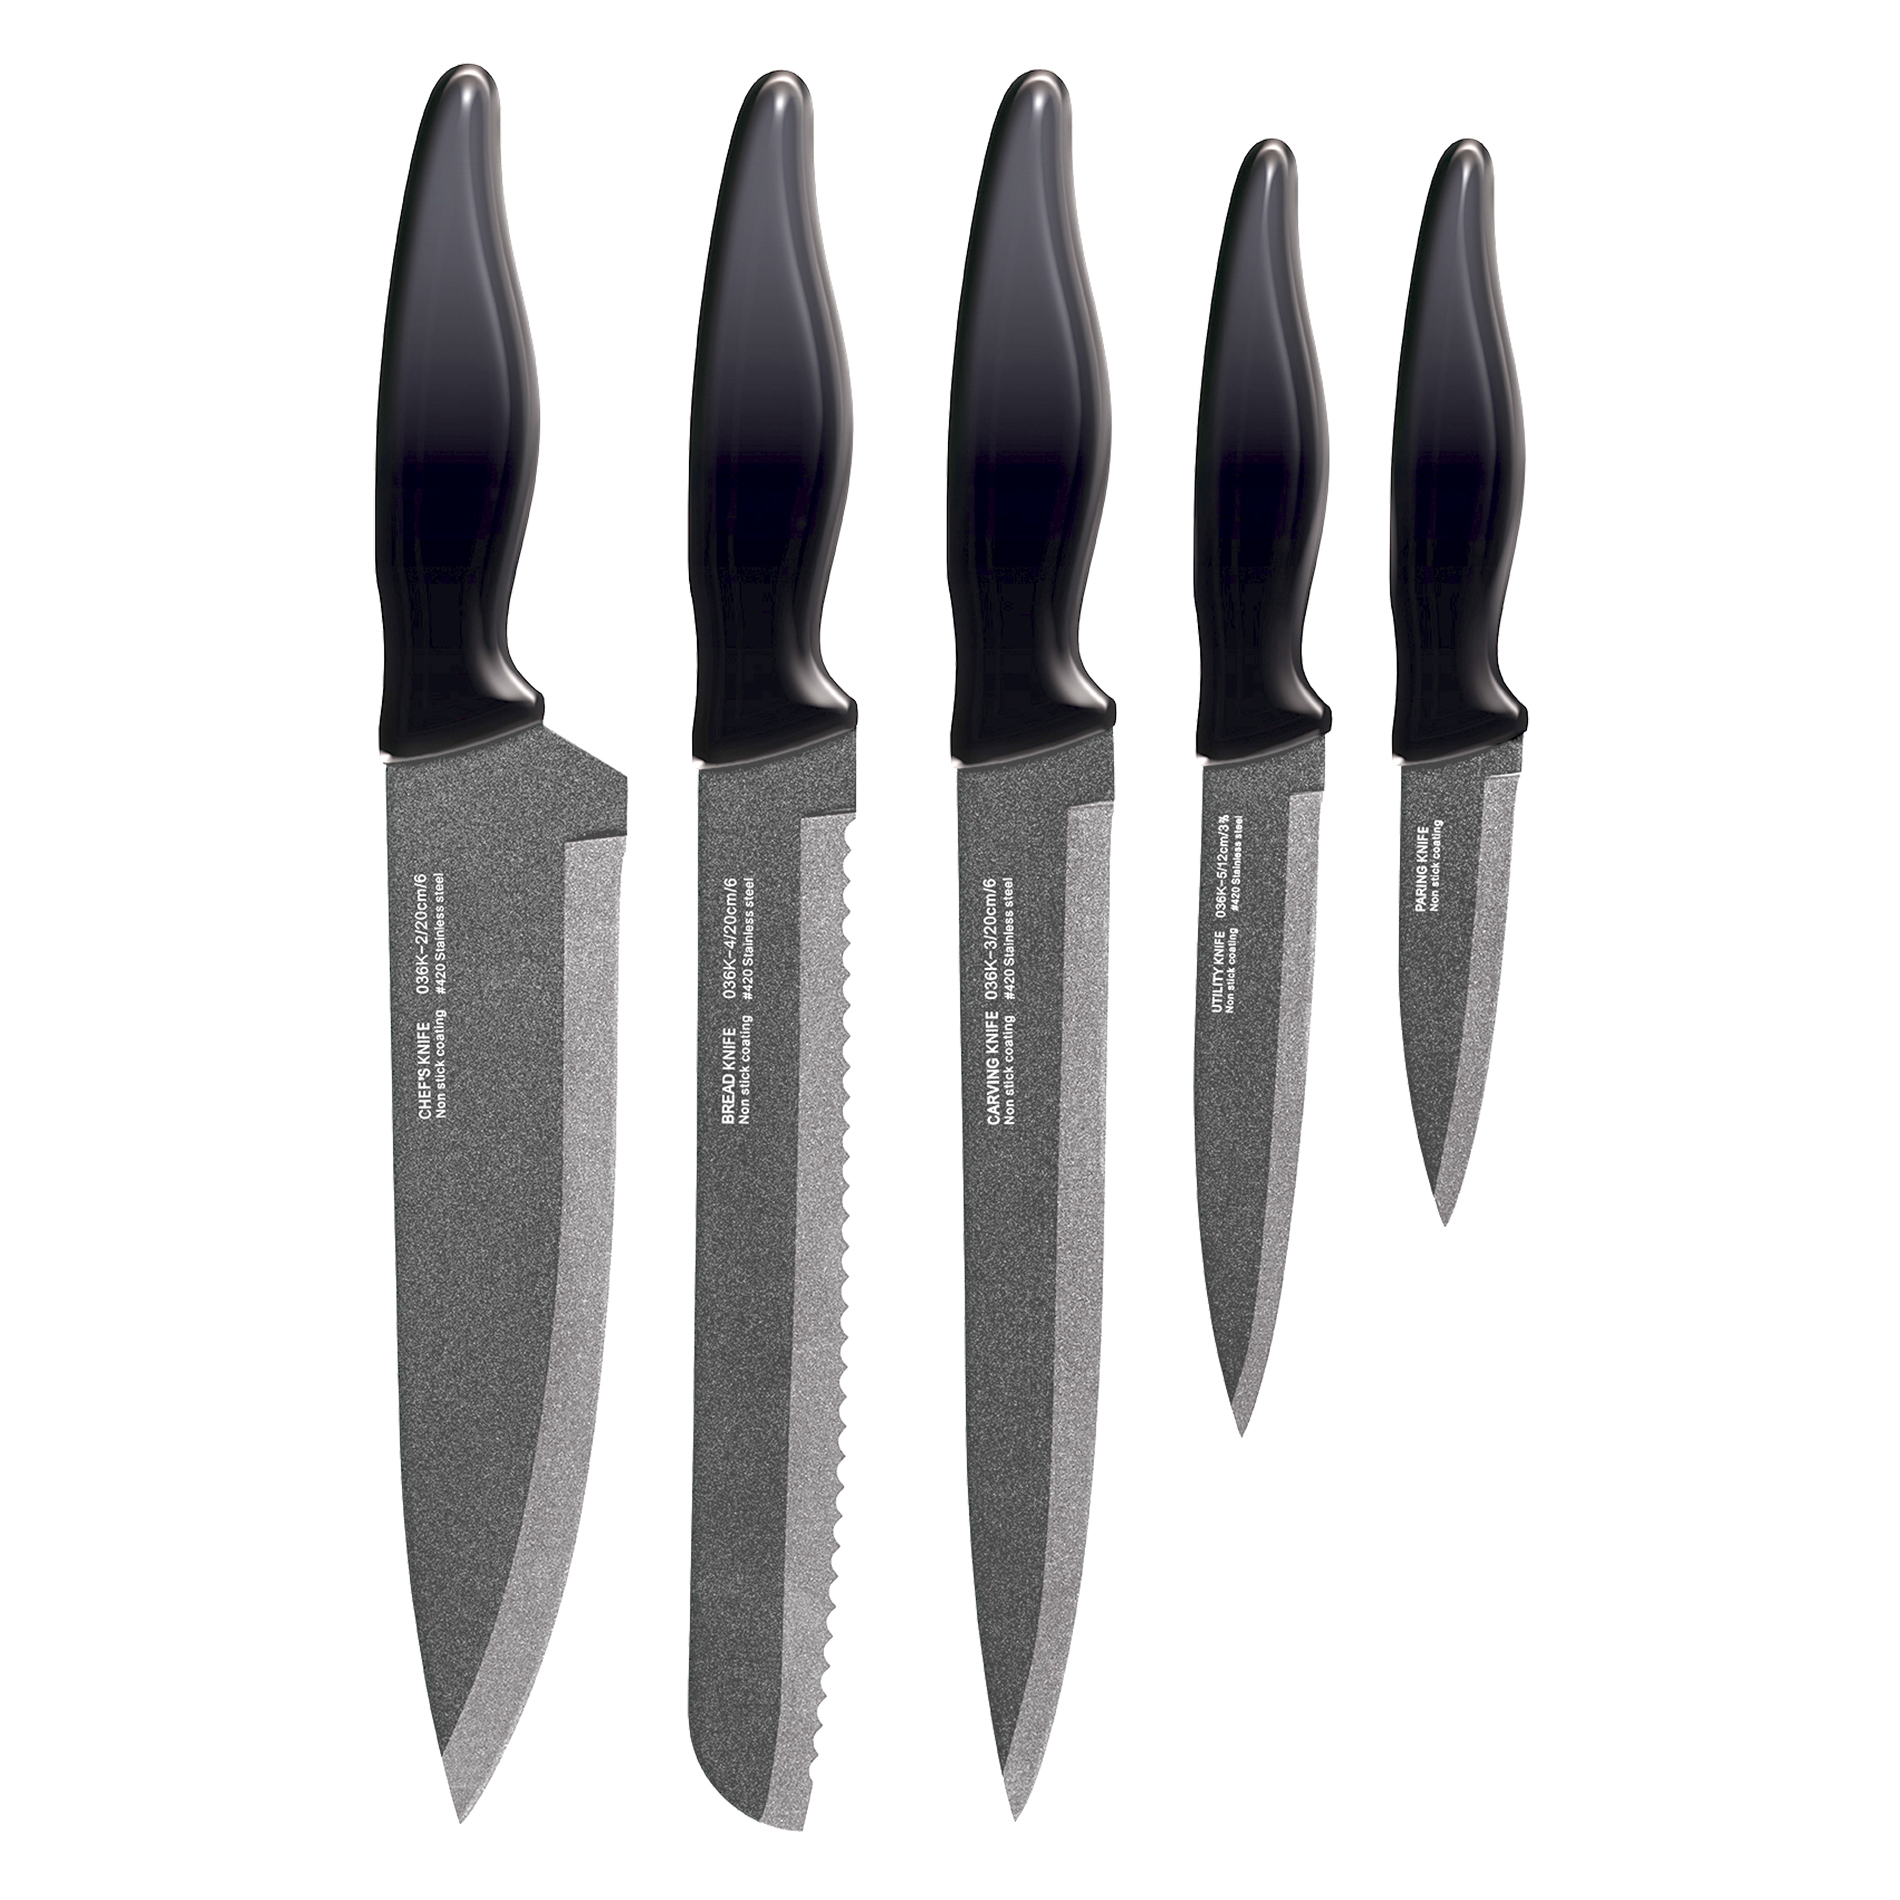 Smile SNS-3 Tacoma Juego de 5 cuchillos de cocina de acero inoxidable con recubrimiento antiadherente, bloque redondo linea moderna, negro